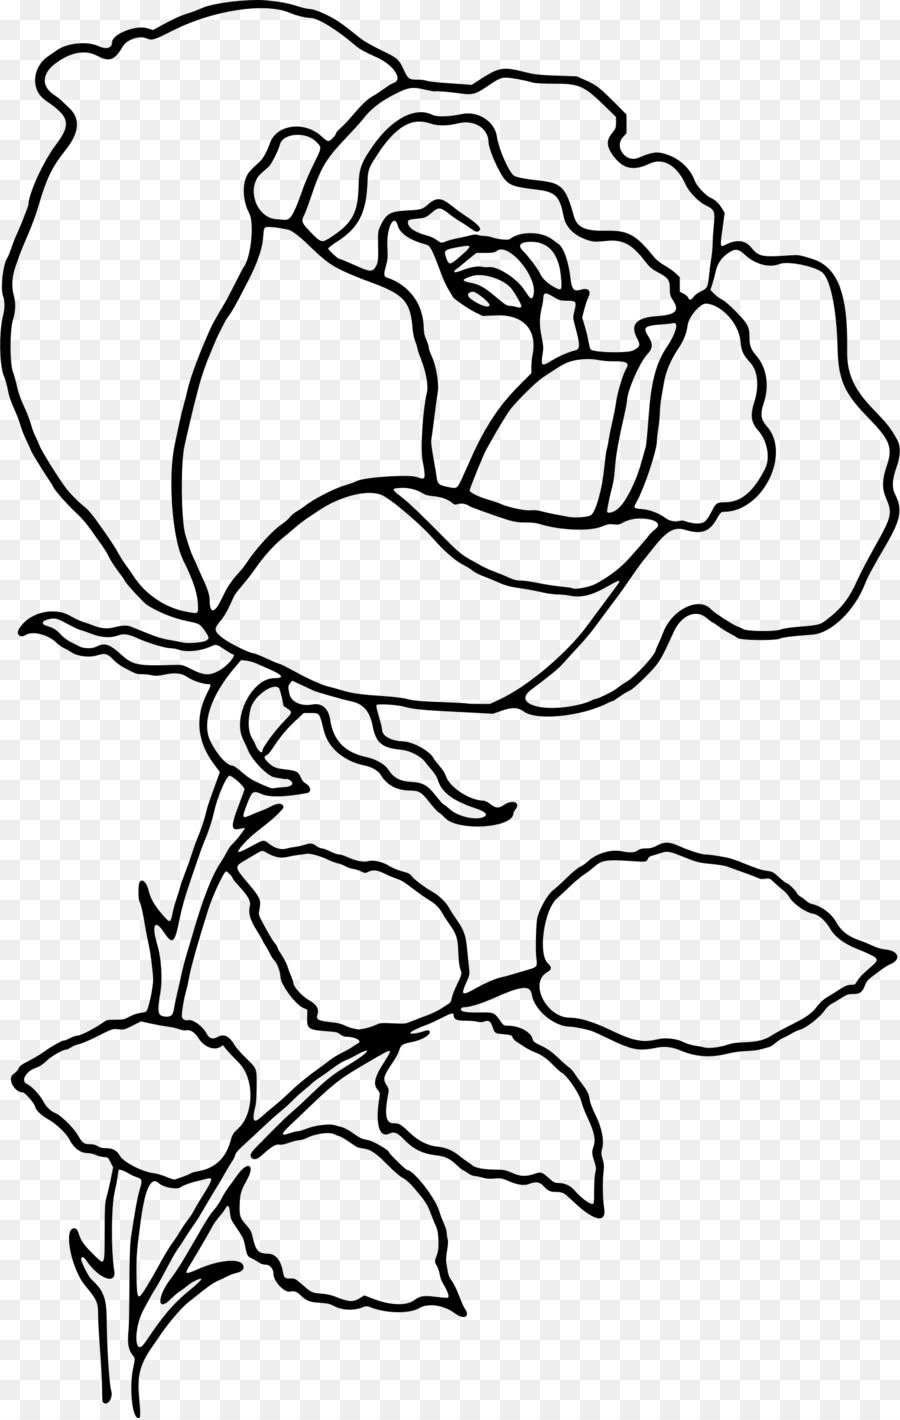 Rose Flower Drawing Clip art - line drawing png download - 1523*2400 - Free Transparent Rose png Download.